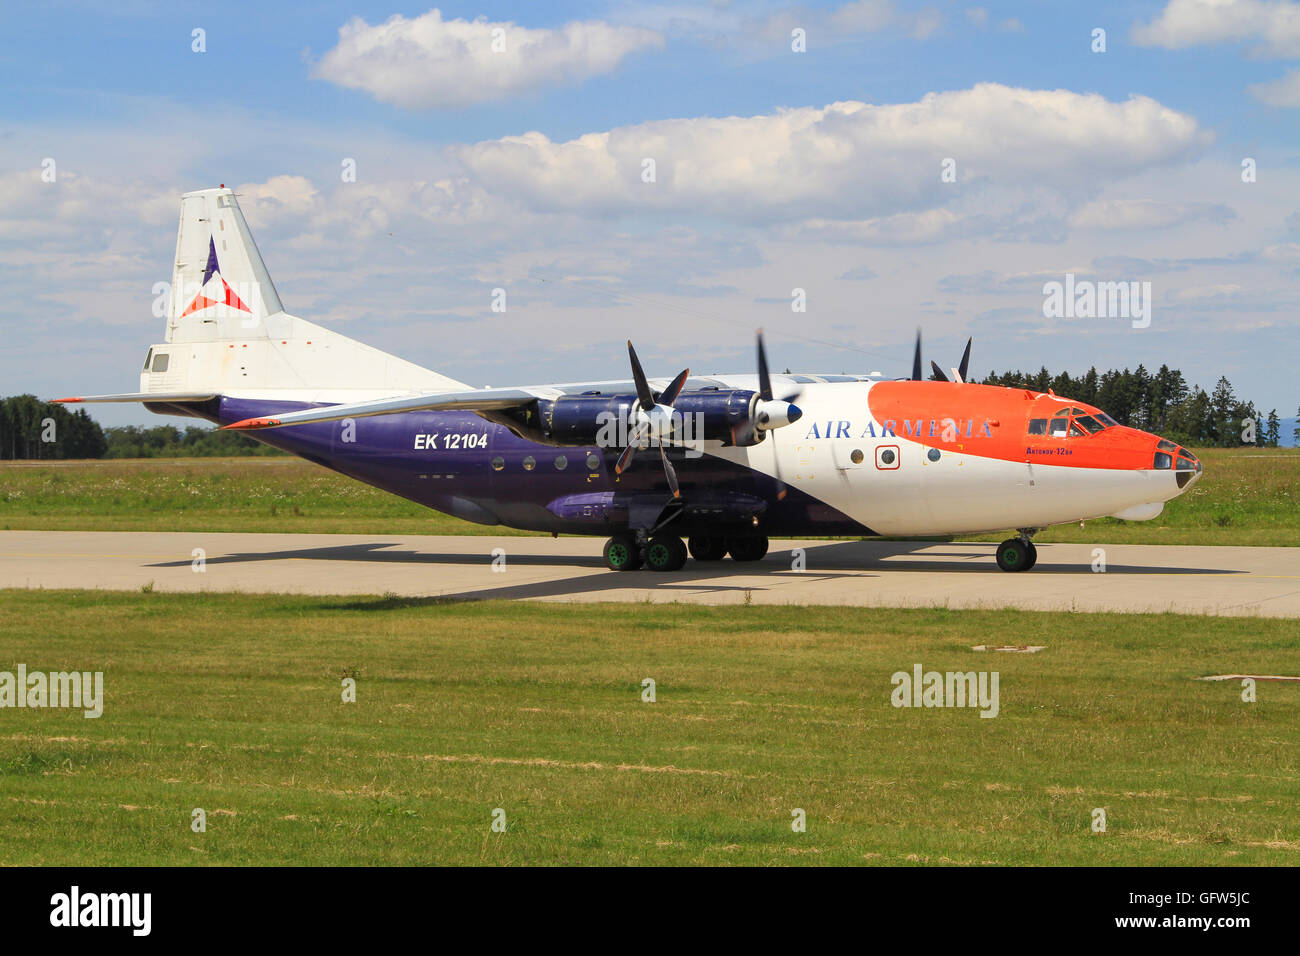 Hahn/Germany September12, 2012: Antonov An12 from Air Armenia at Hahn Airport Stock Photo